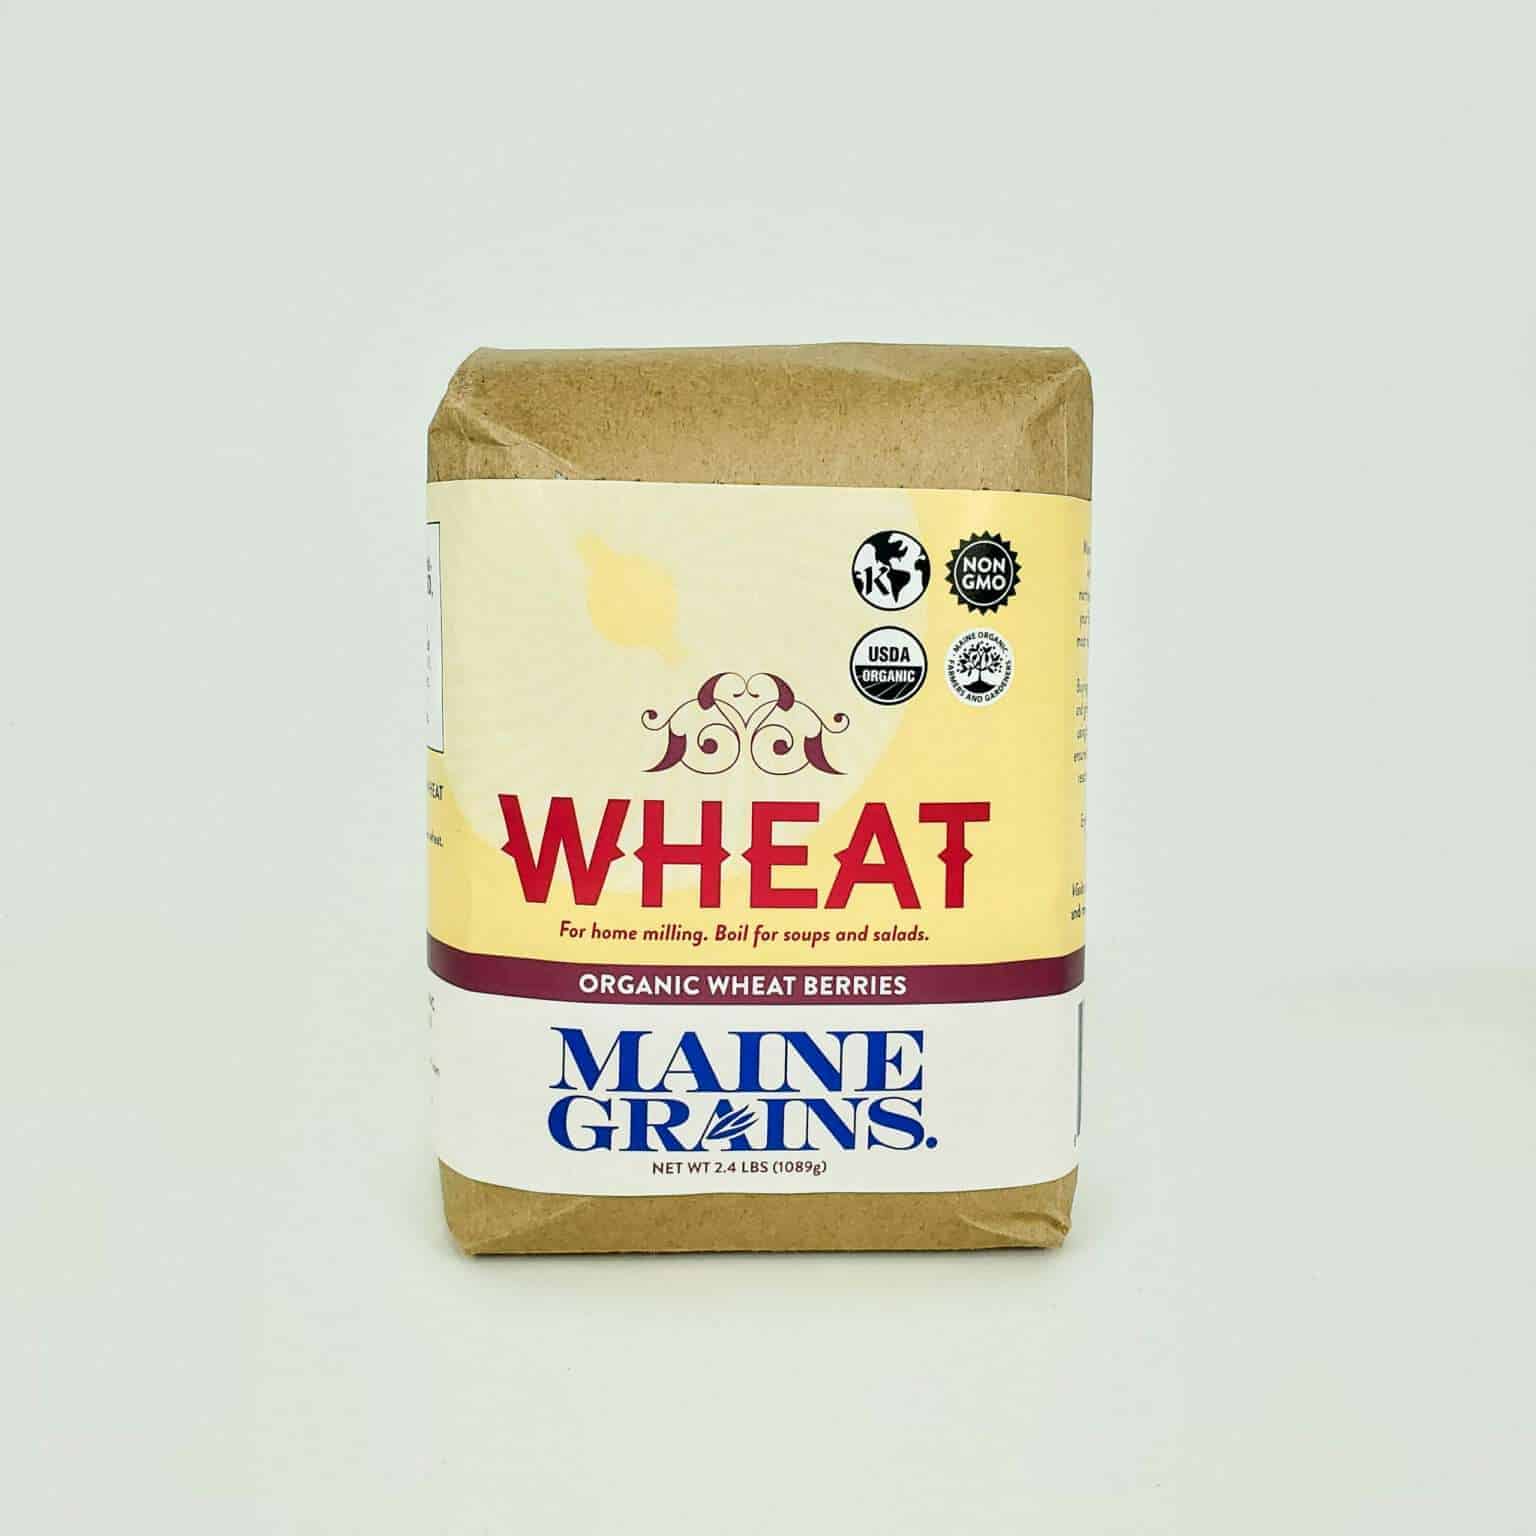 Organic Whole Wheat Berries Maine Grains